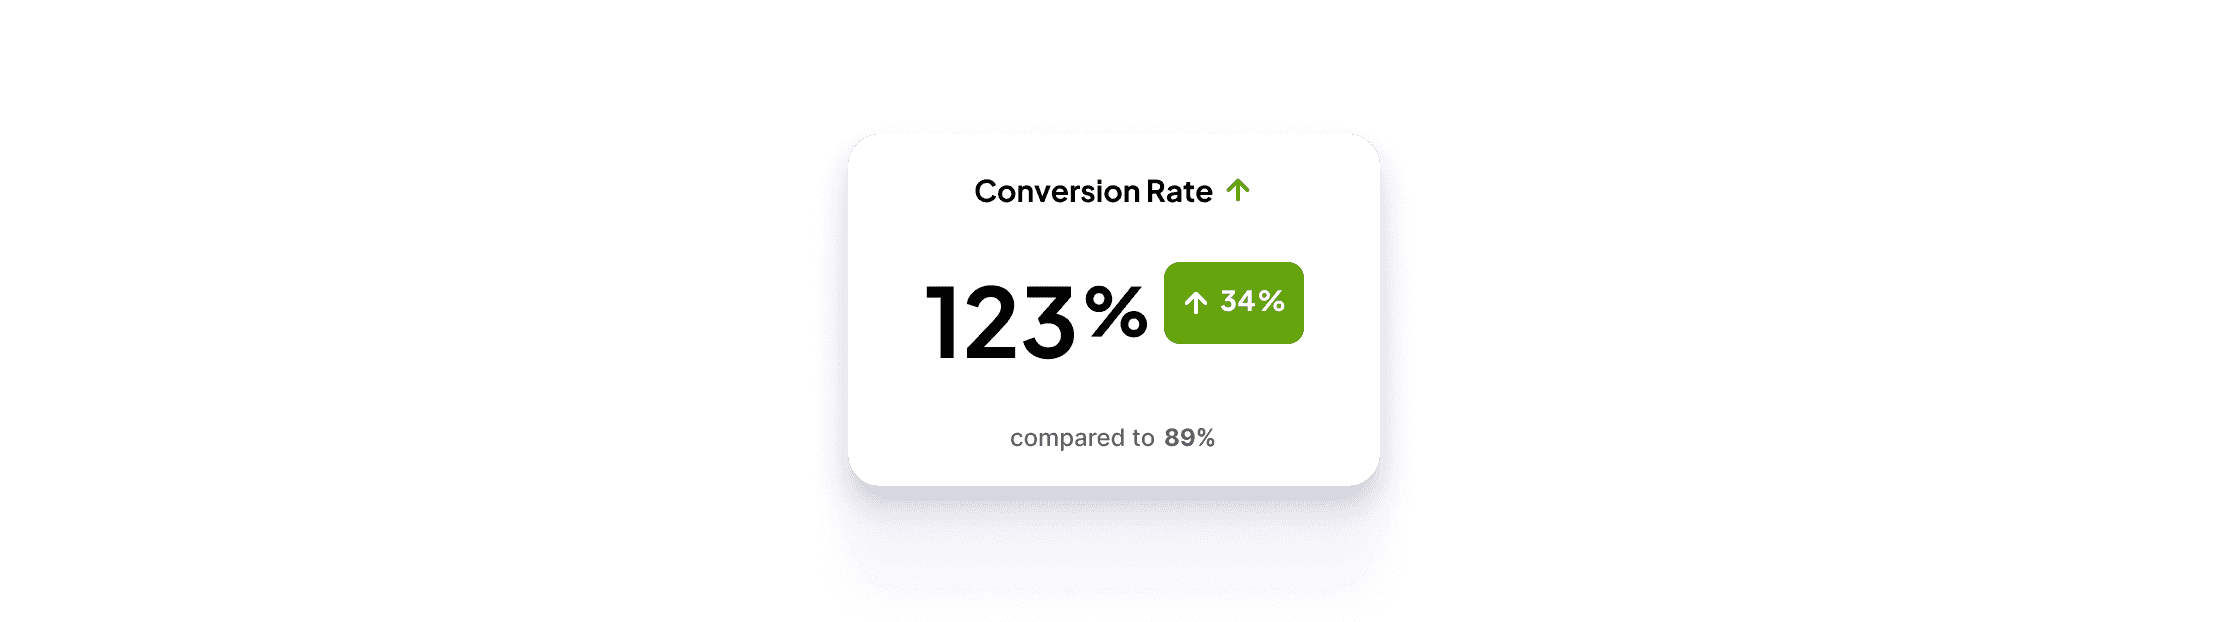 Conversion score goes up